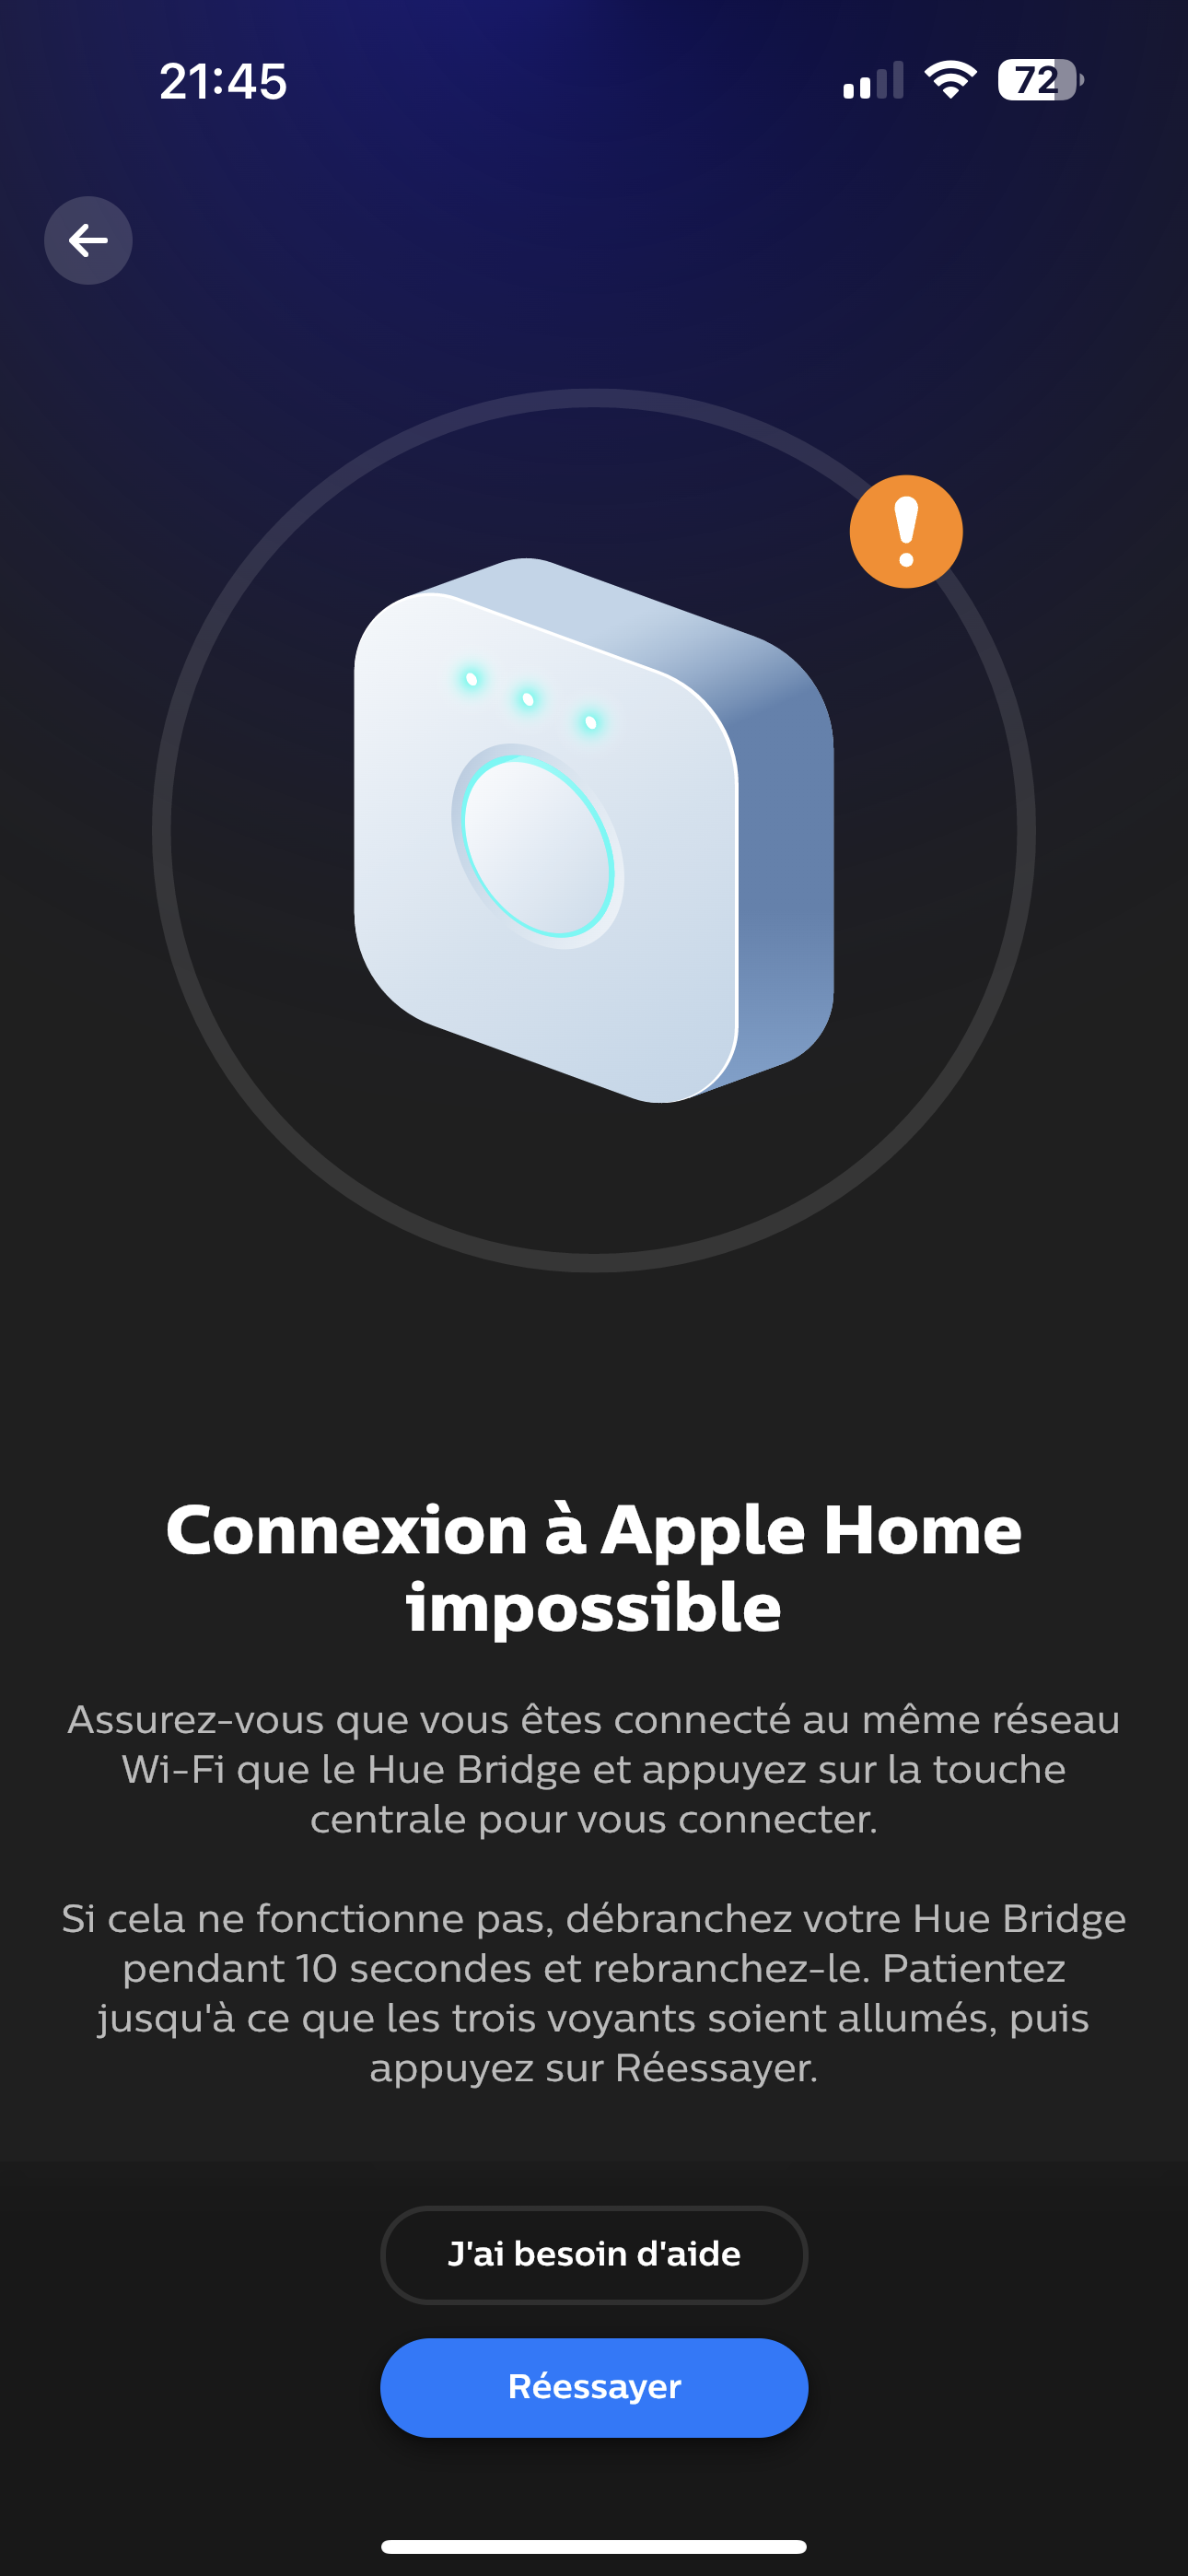 Philips Hue and Apple HomeKit